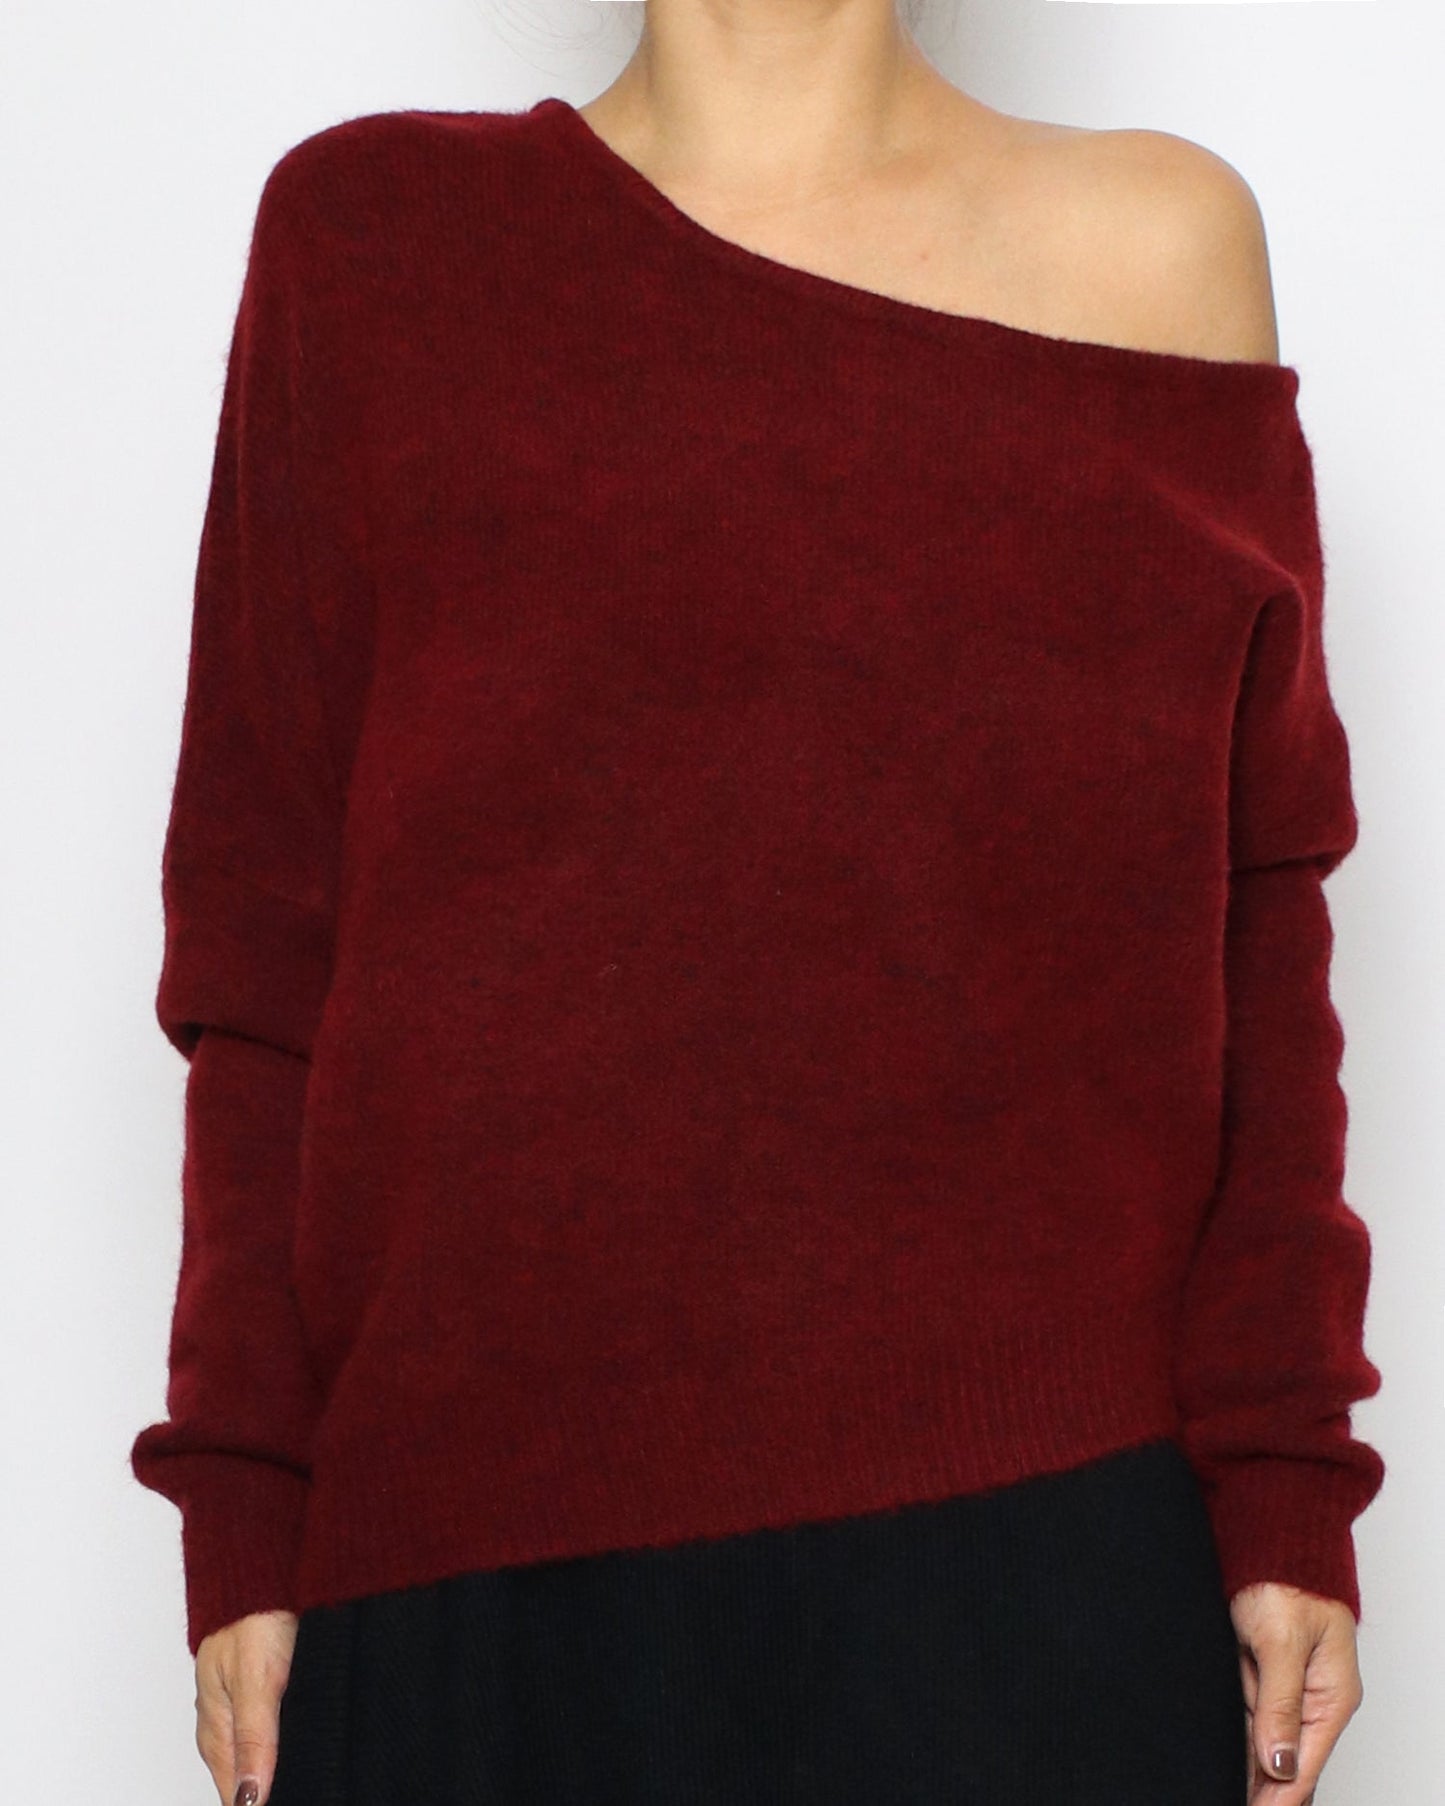 burgundy red off shoulder knitted top